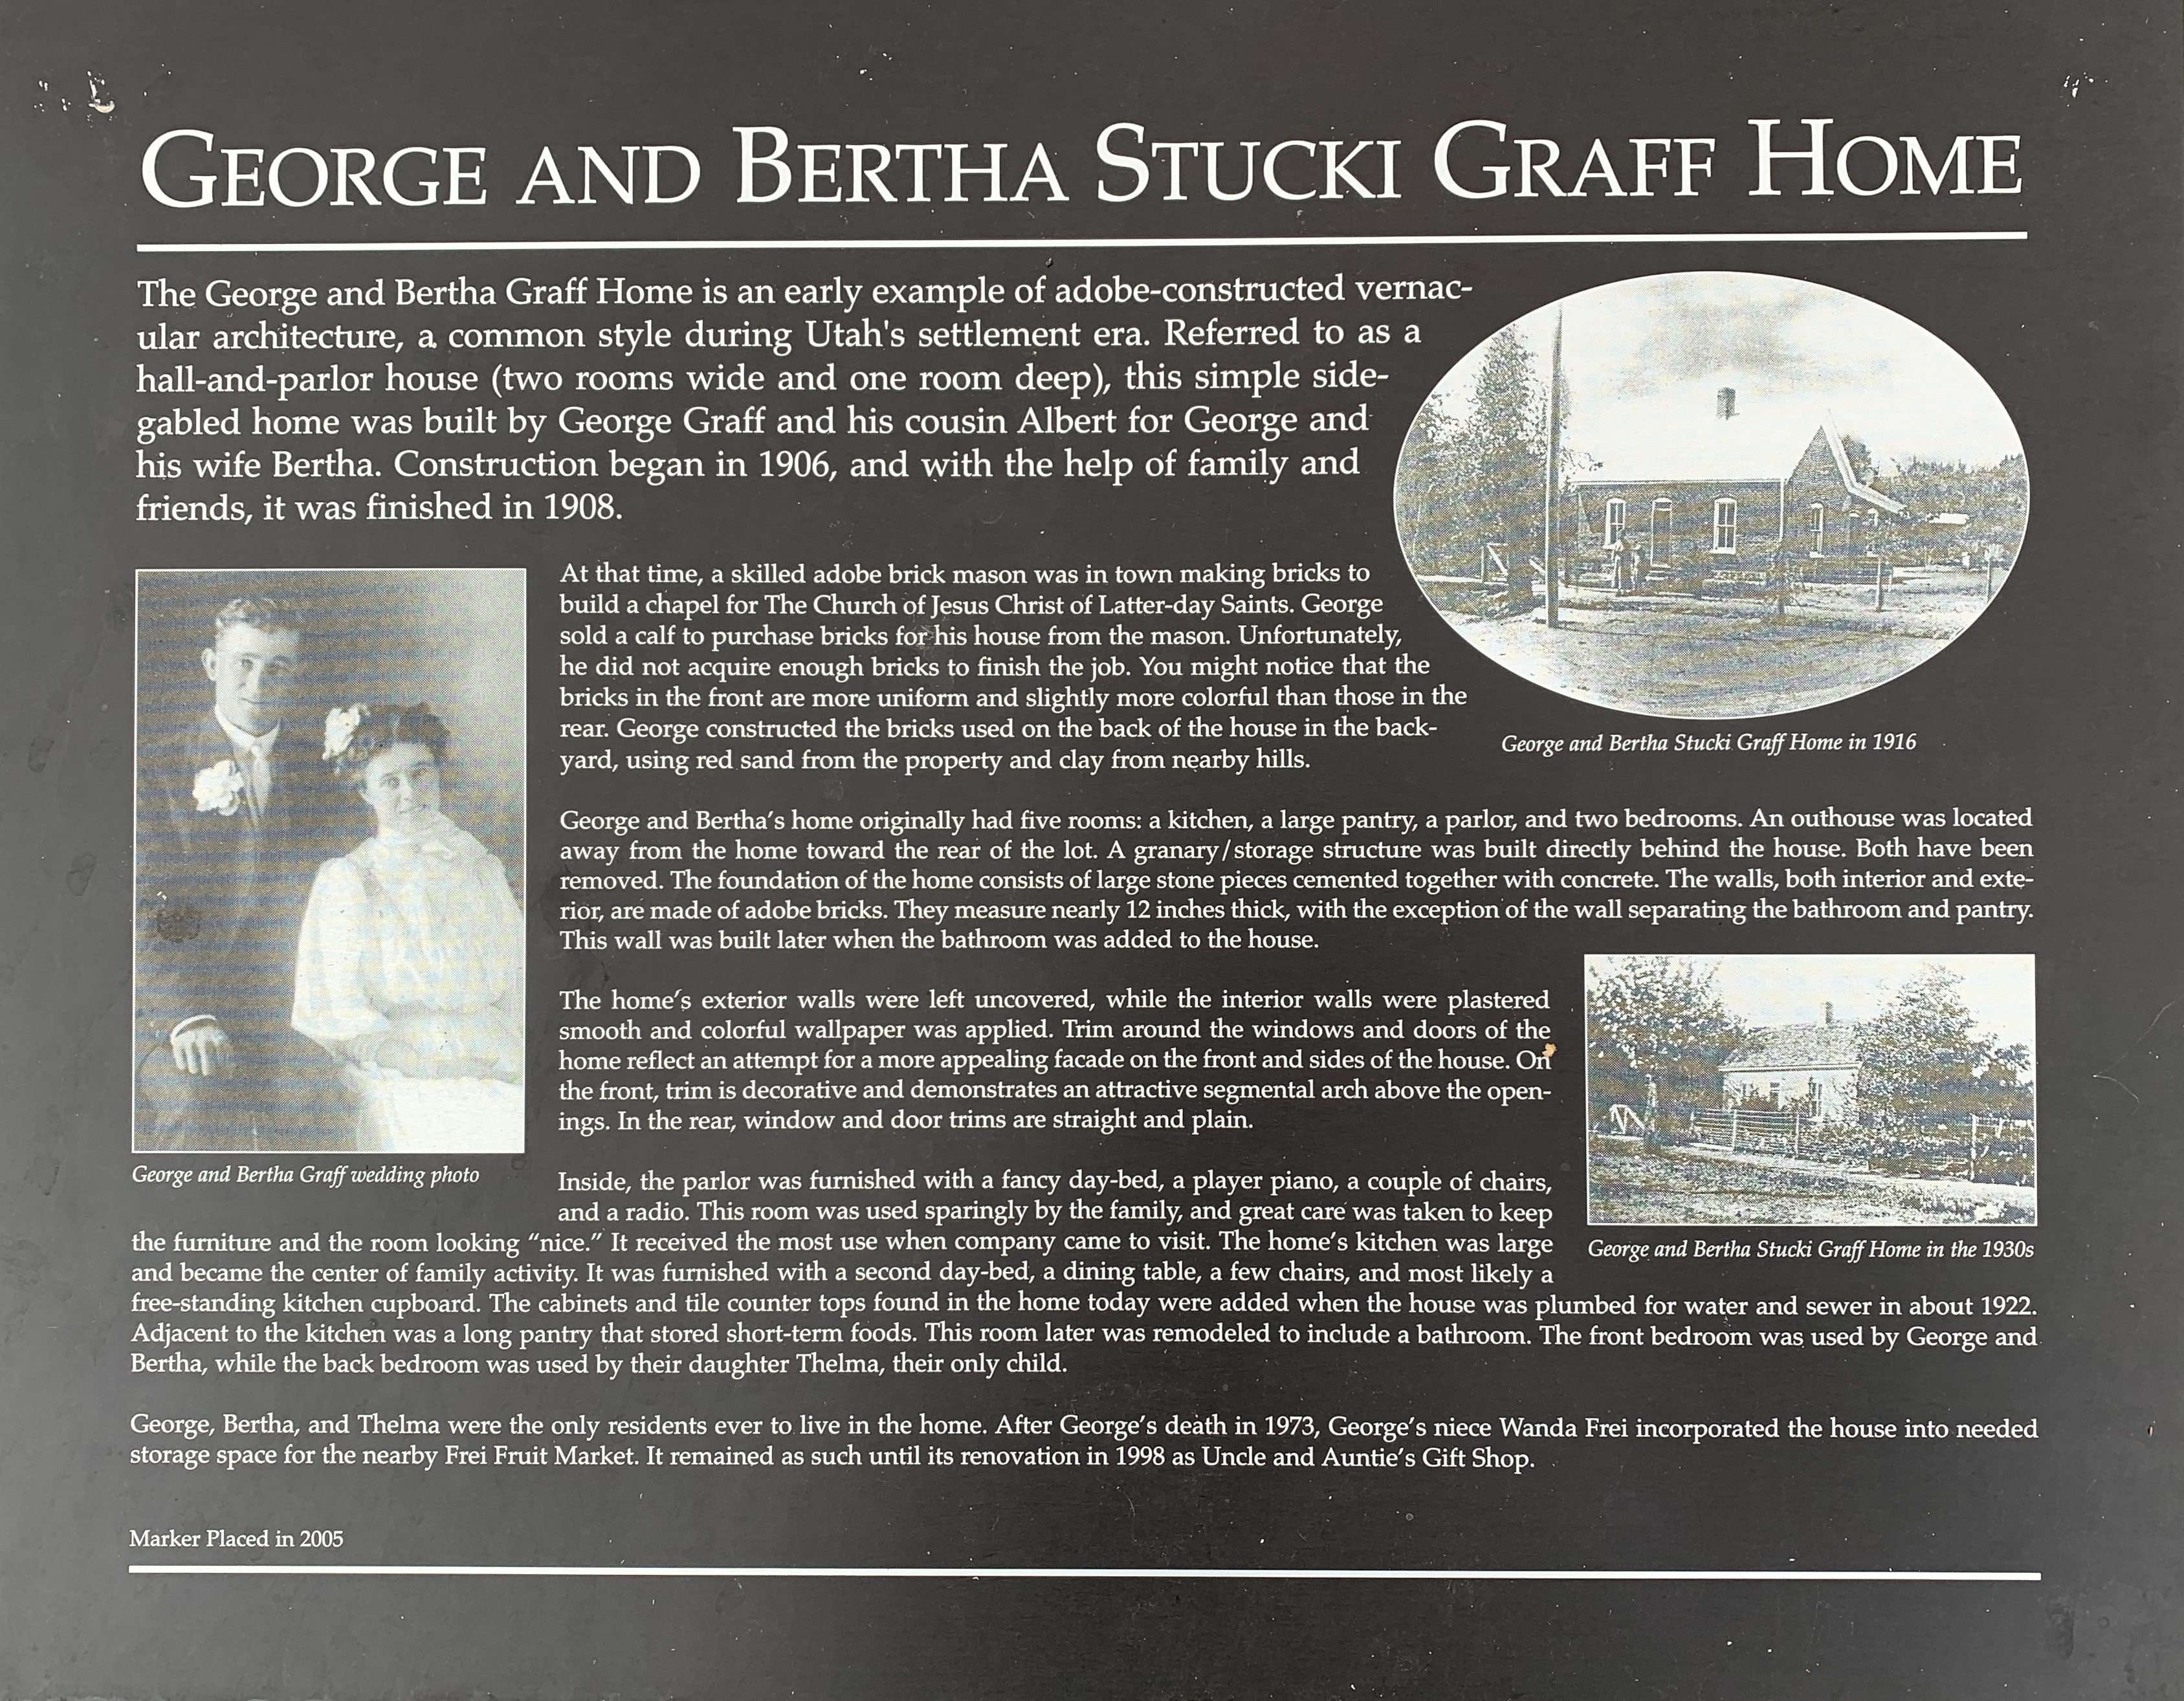 Interpretive sign for the George and Bertha Stucki Graff Home